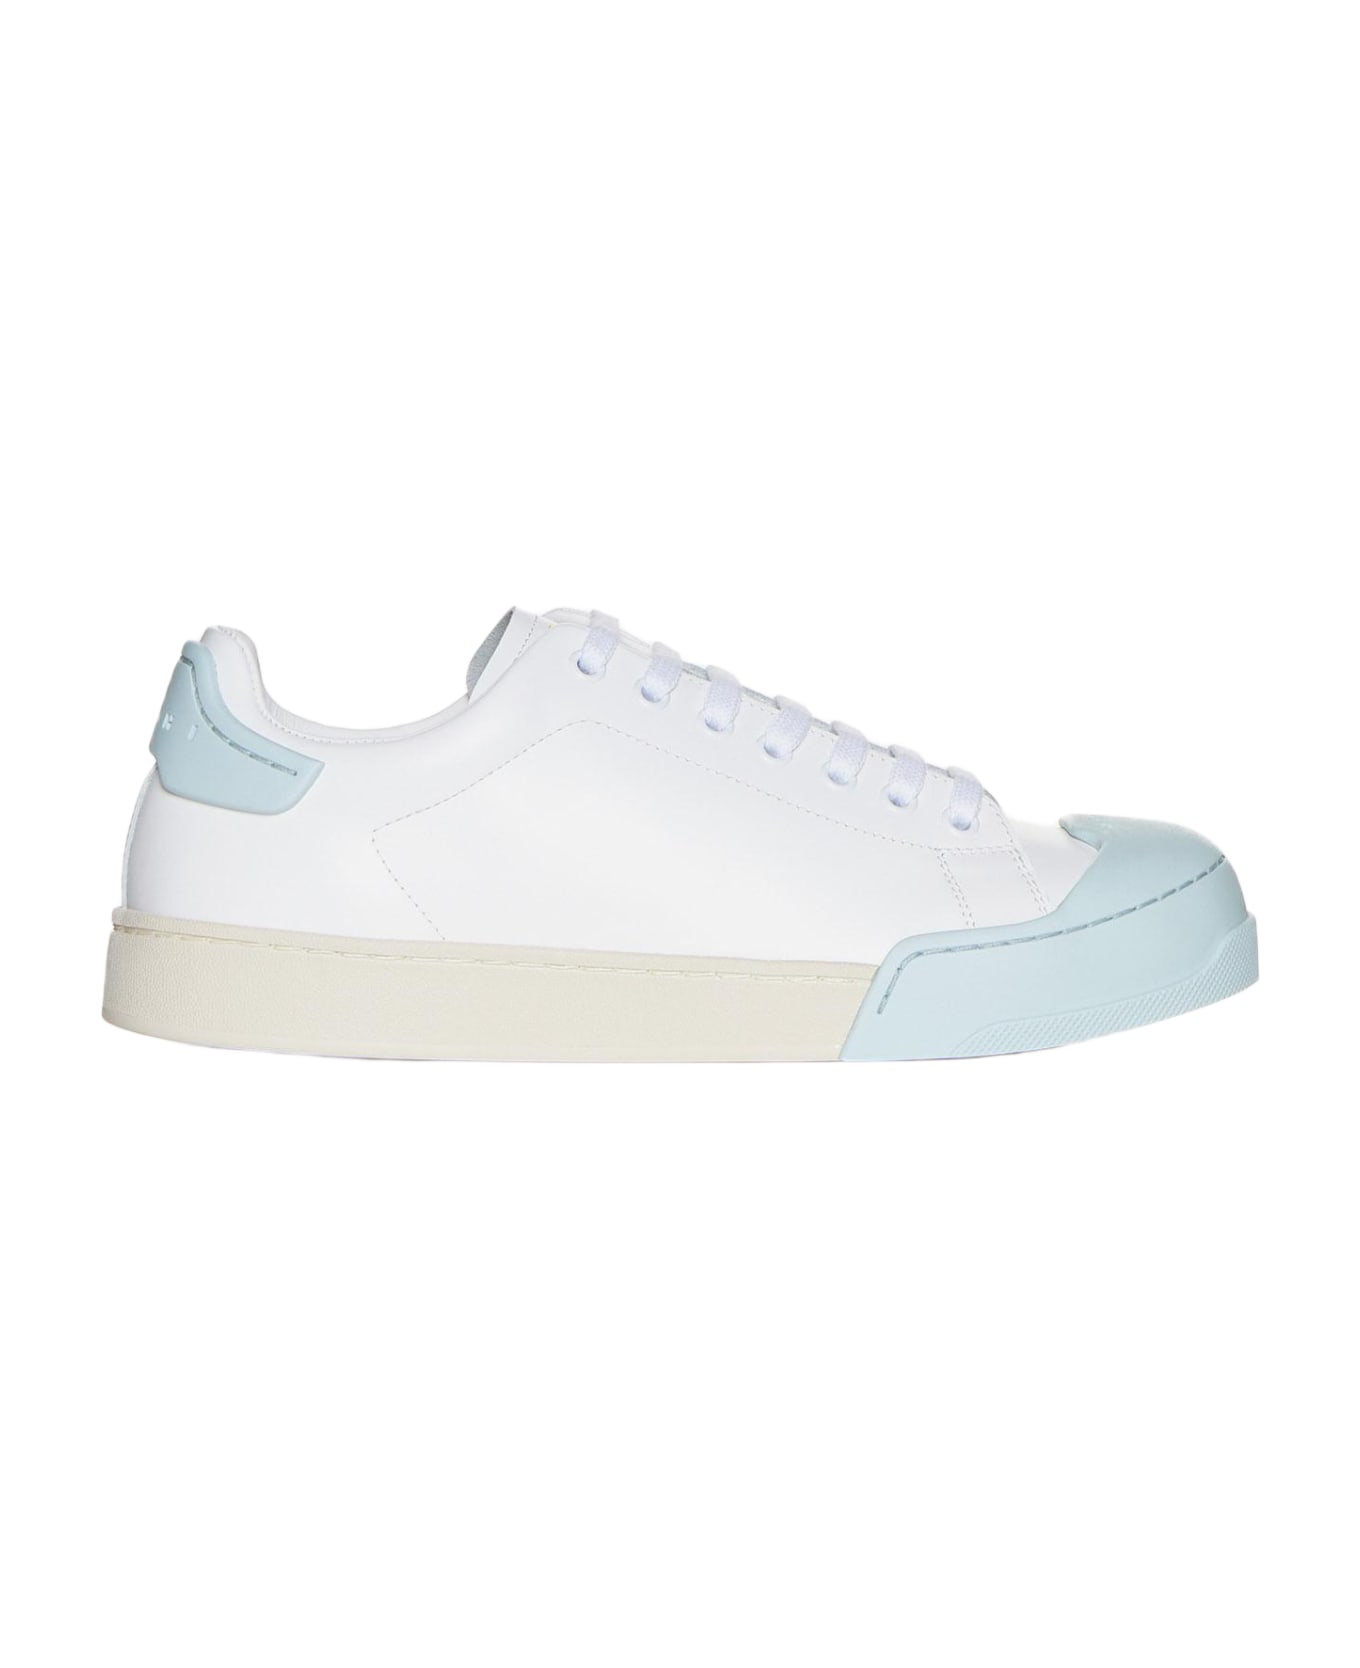 Marni Dada Bumper Leather Sneakers - White / light blue